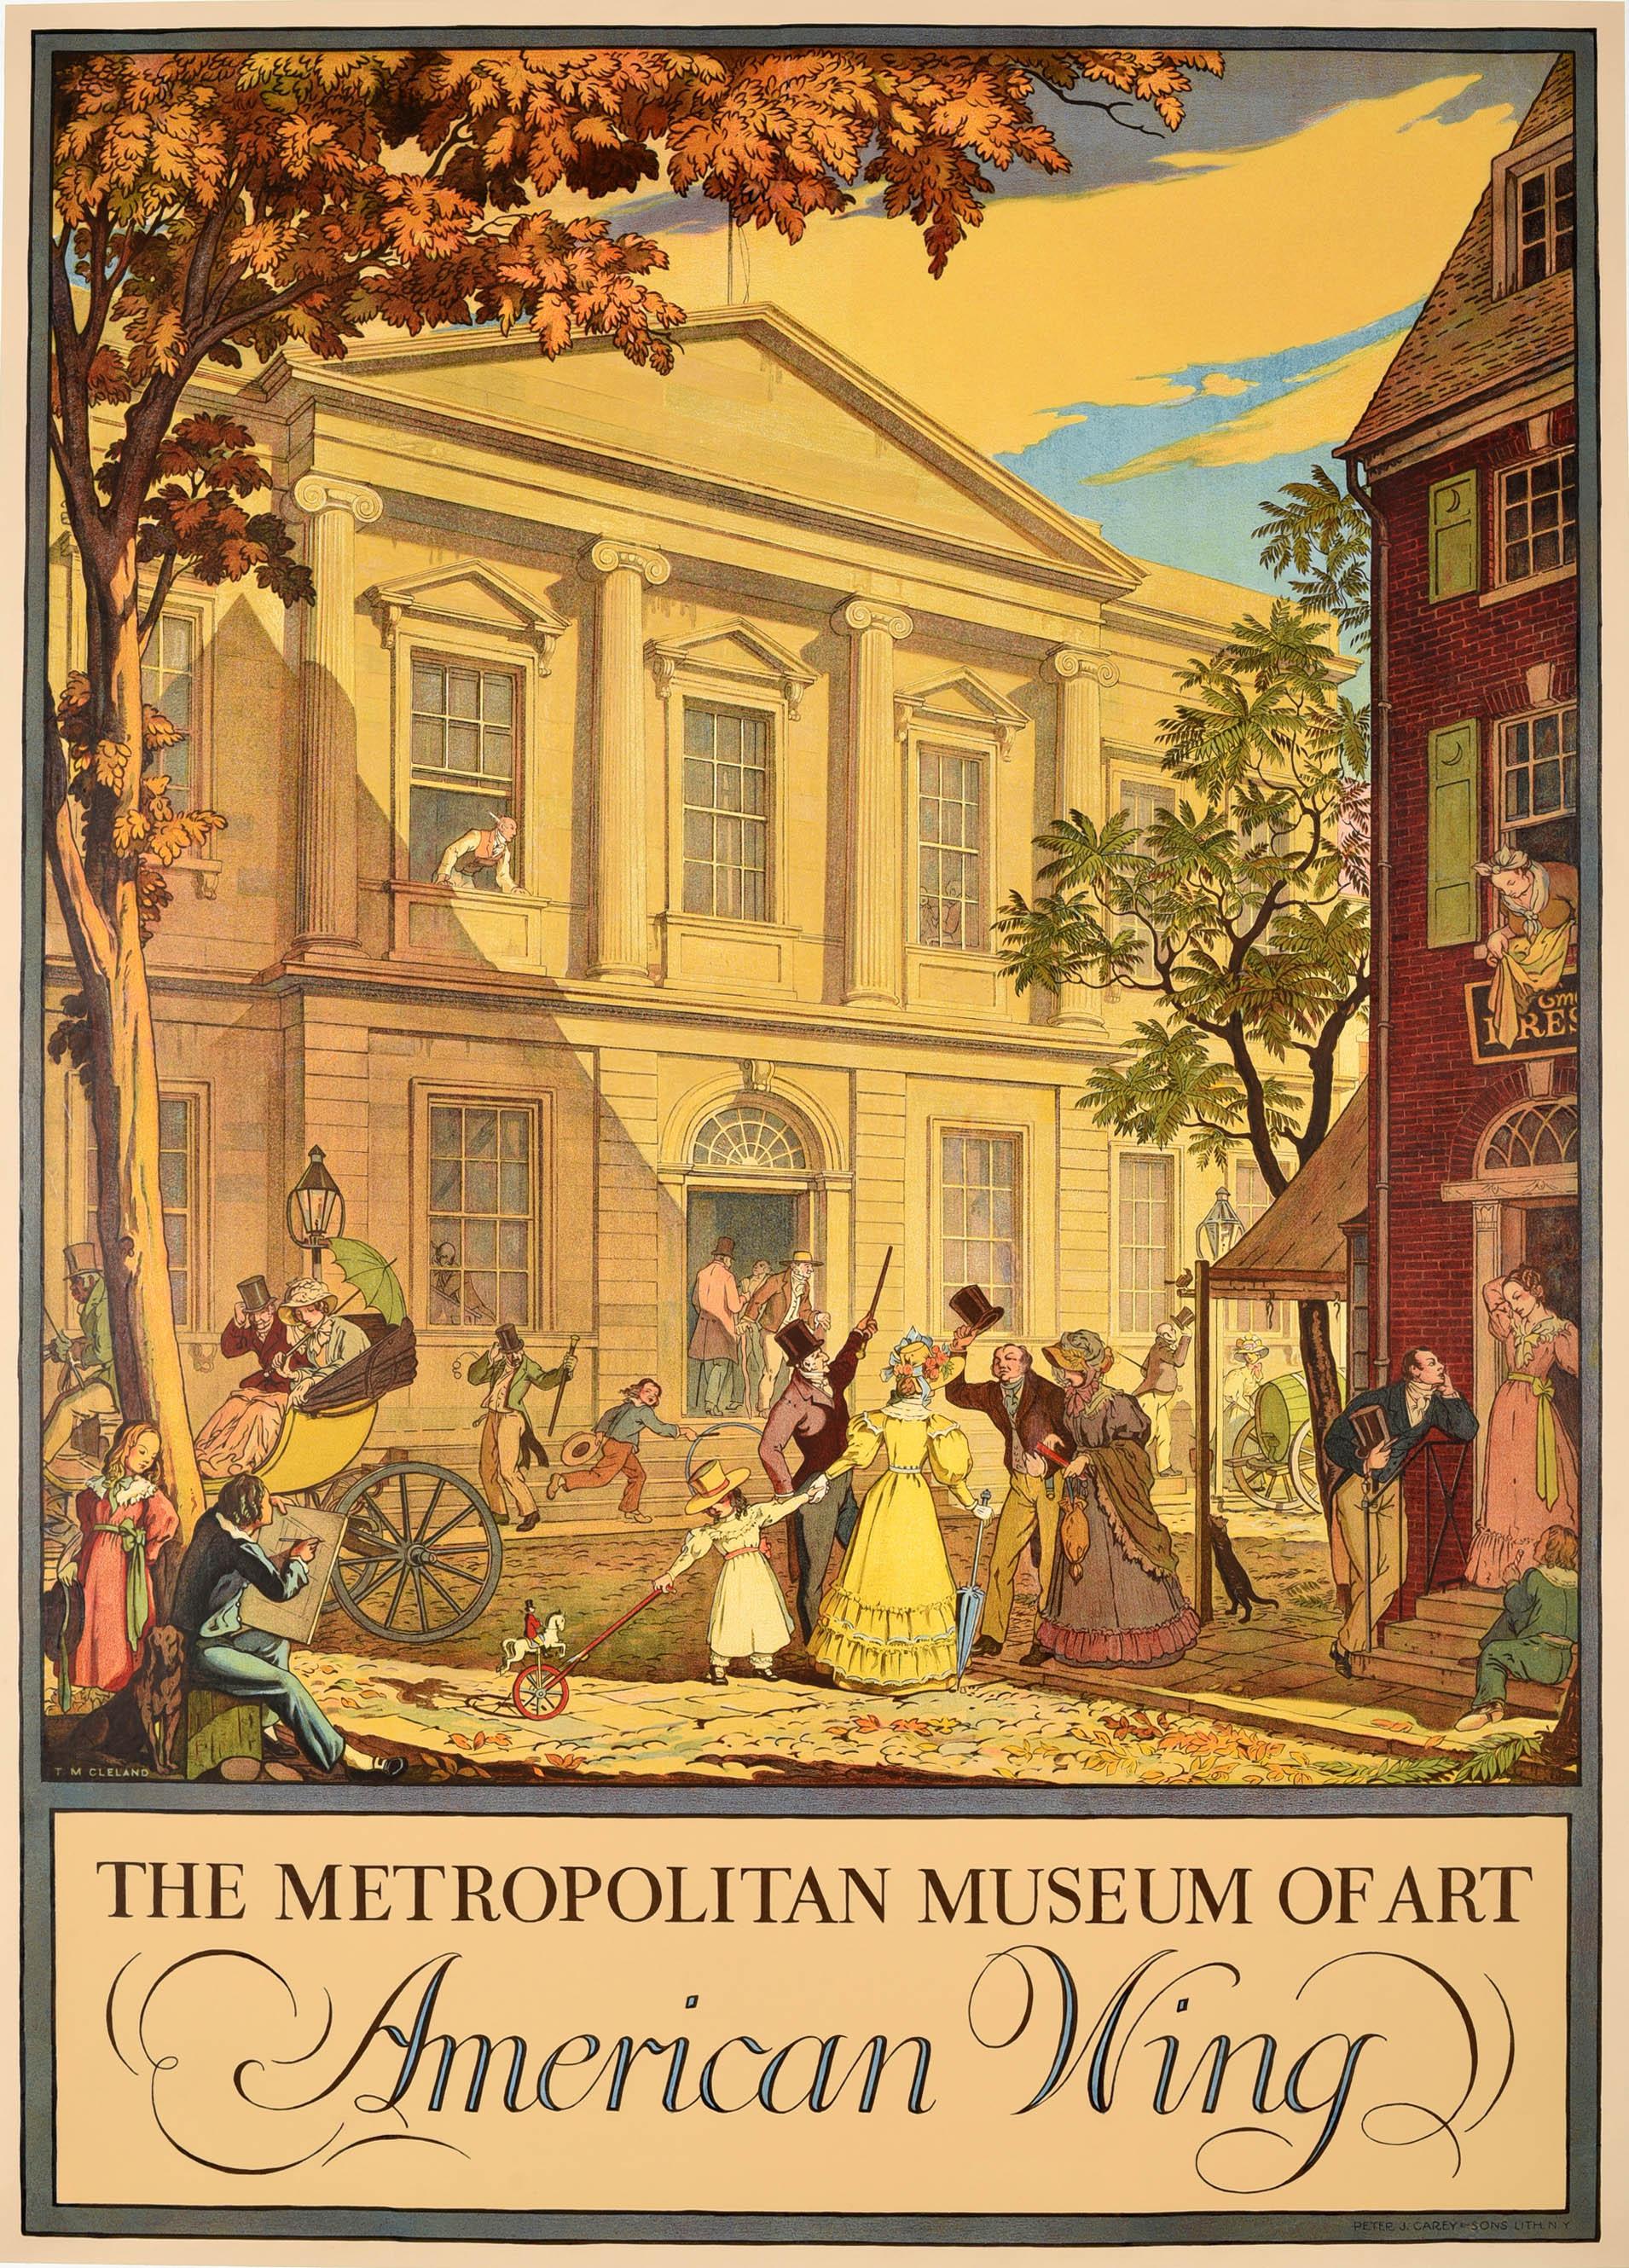 Thomas Maitland Cleland Print – Original-Vintage-Poster, The Metropolitan Museum of Art, American Wing New Gallery